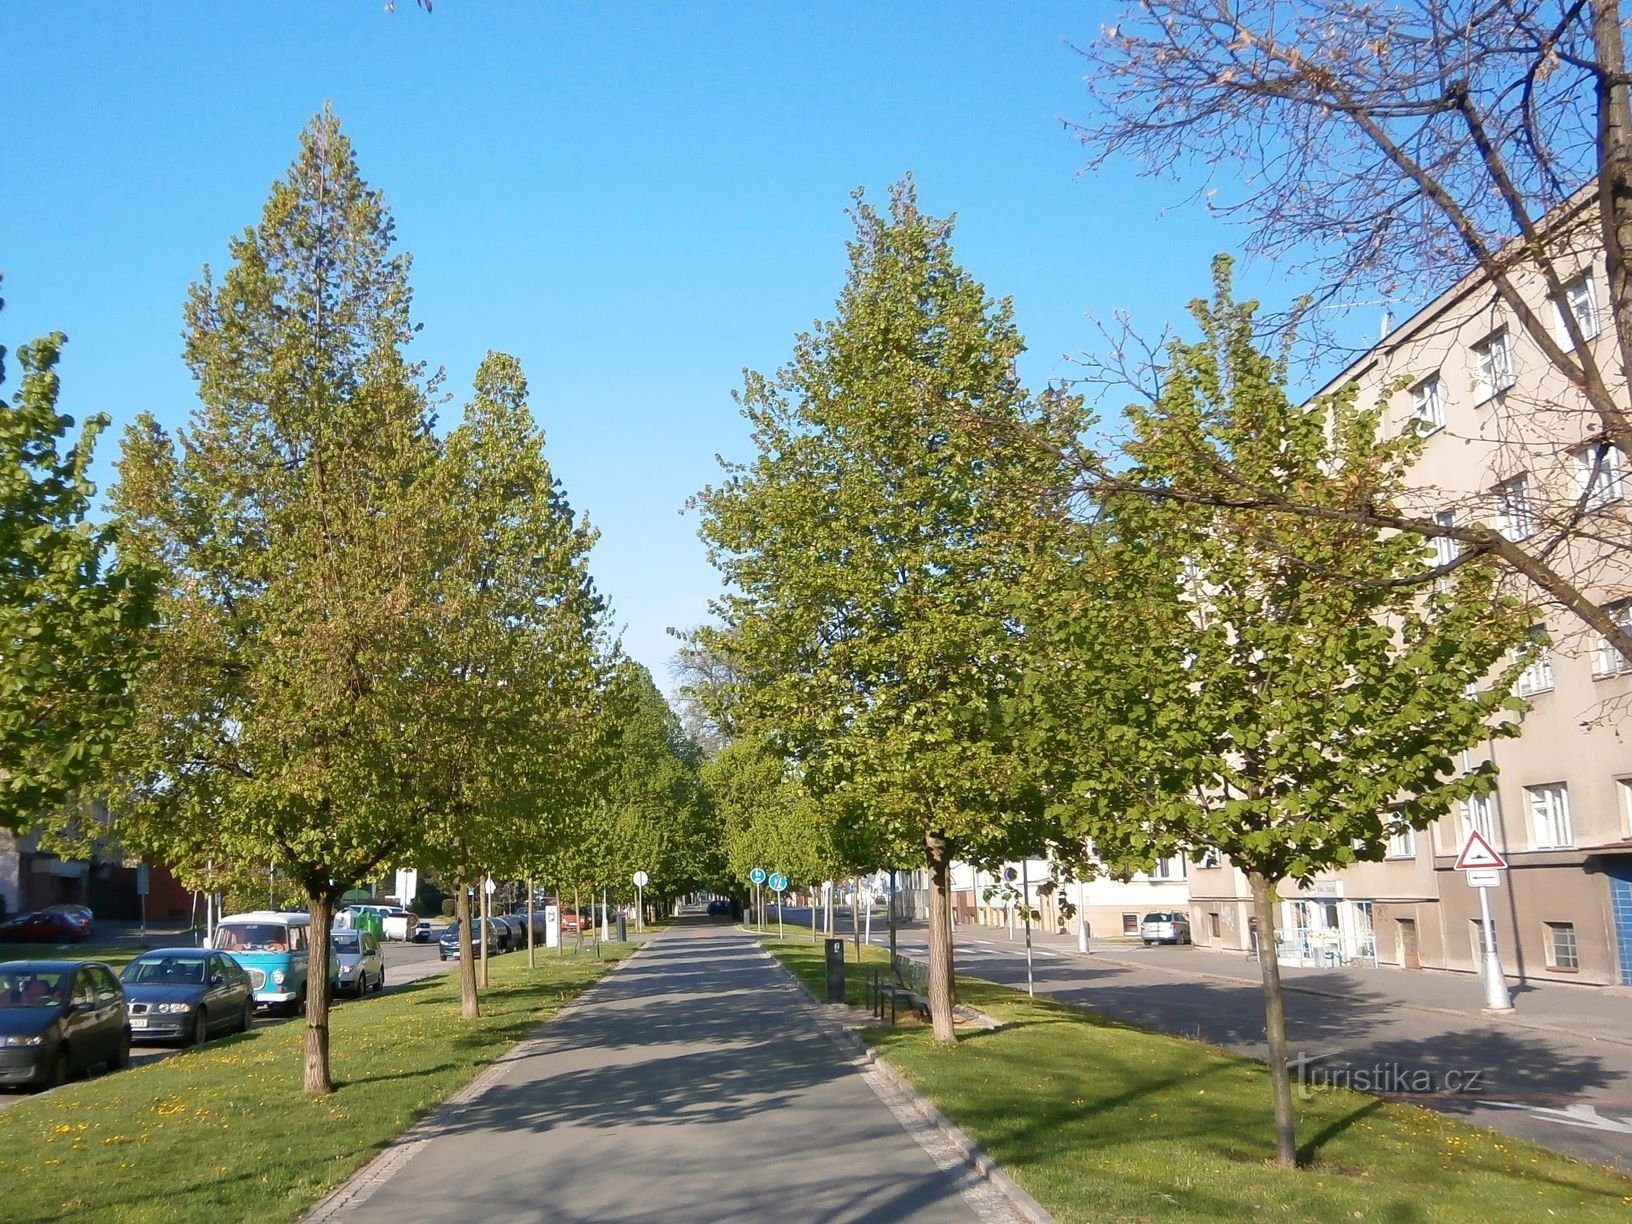 Limite degli alberi Lipky (Hradec Králové, 20.4.2014/XNUMX/XNUMX)